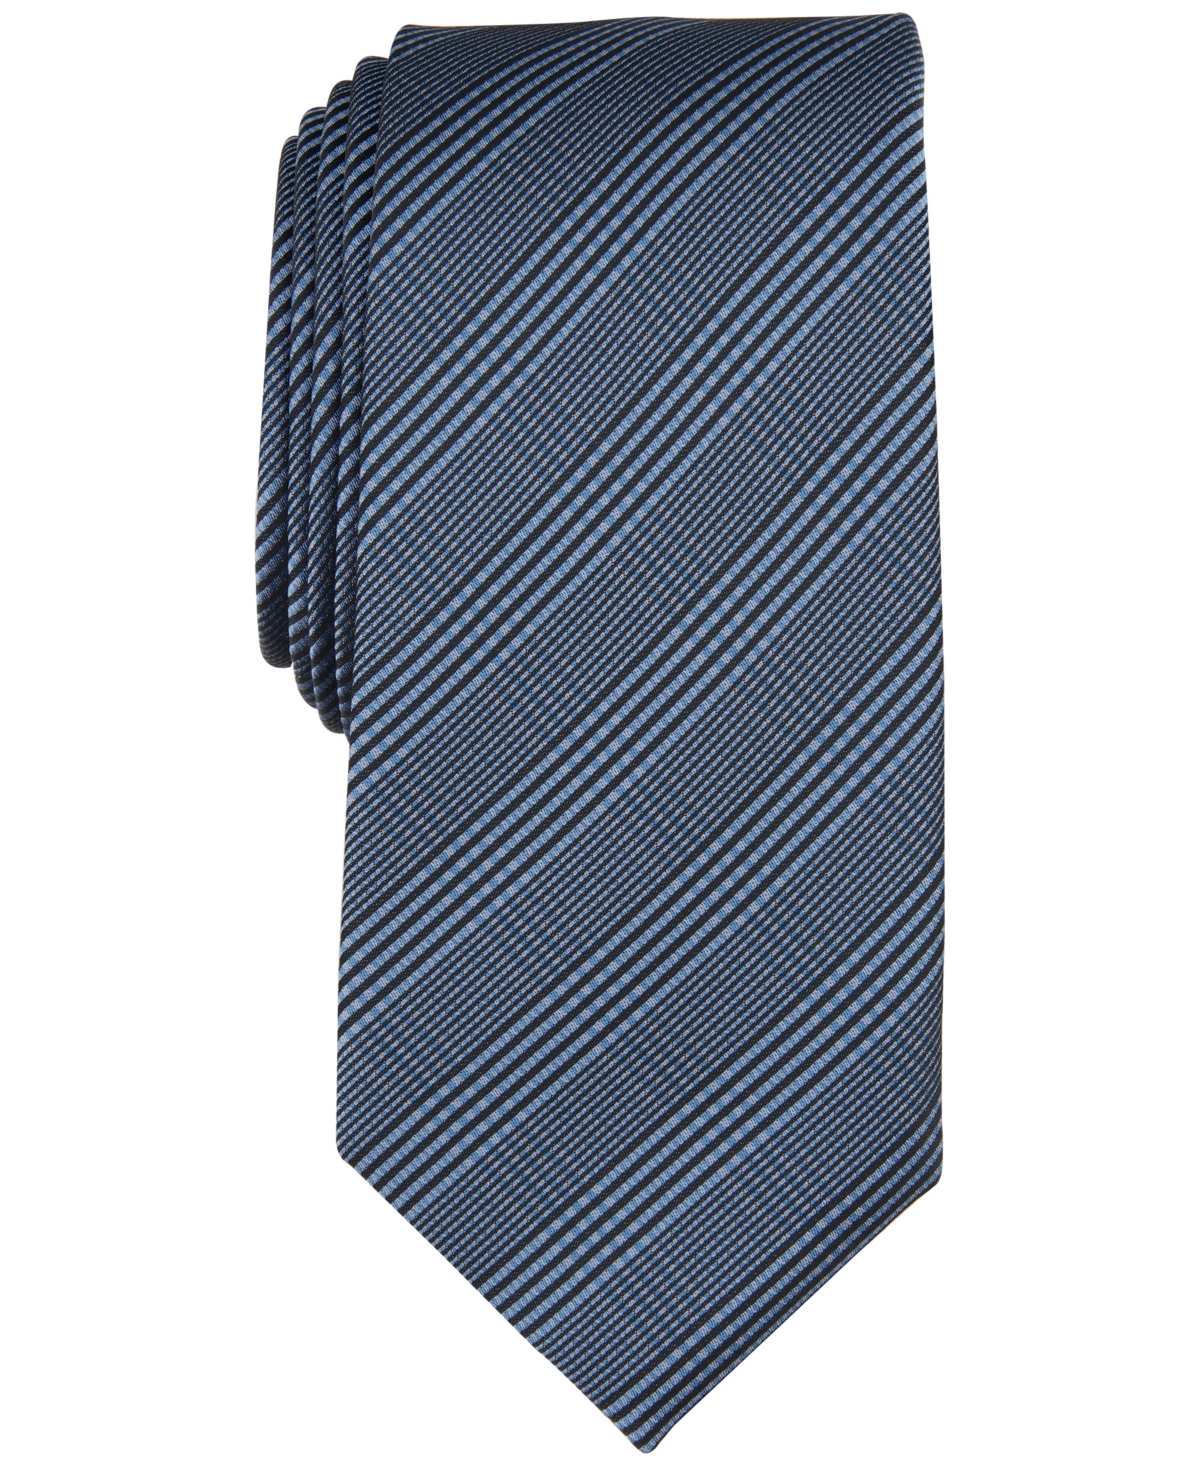 Men's Stockton Plaid Tie, Created for Macy's - Denim